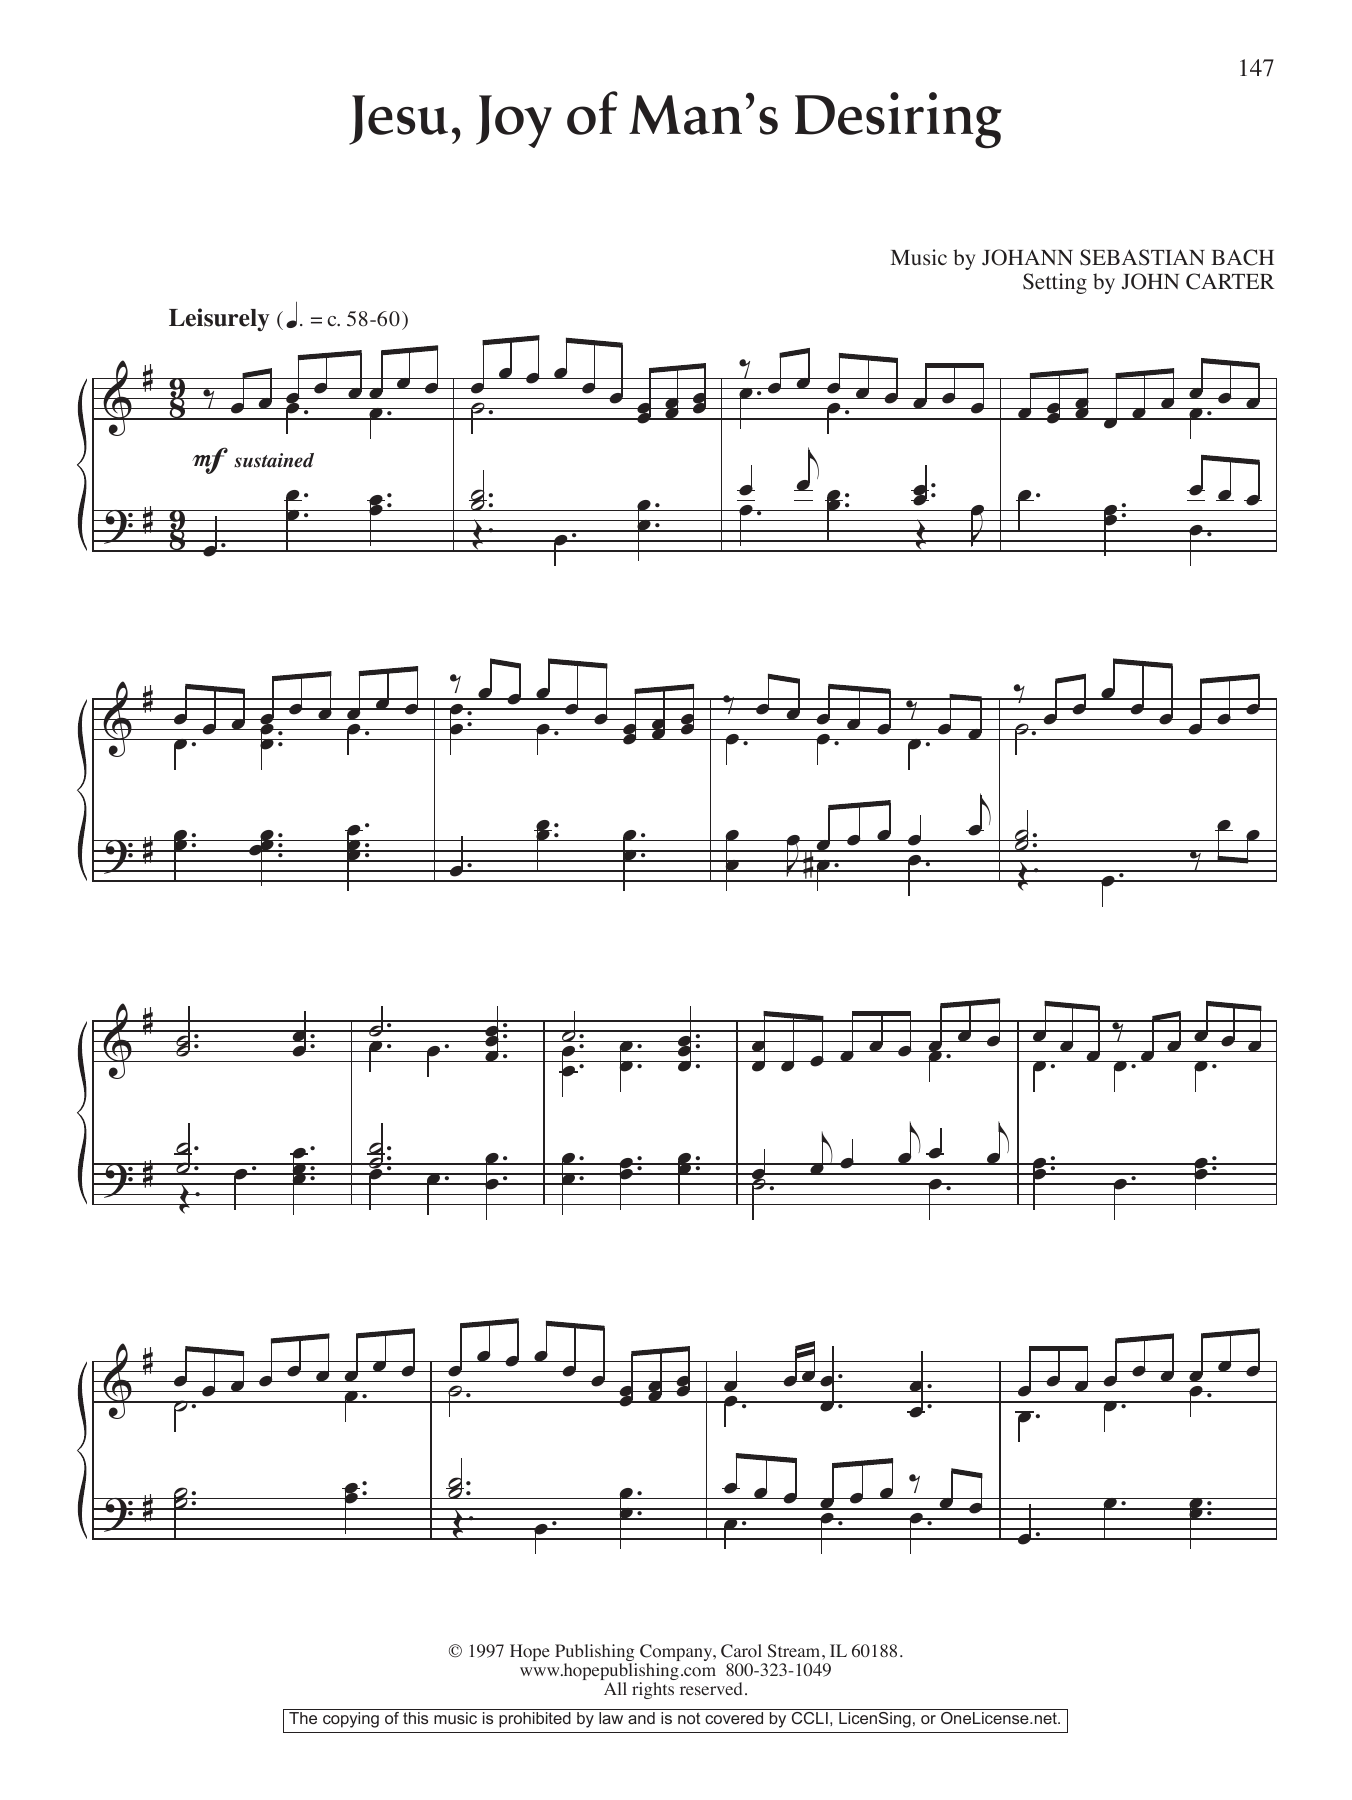 Download John Carter Jesu, Joy of Man's Desiring Sheet Music and learn how to play Piano Solo PDF digital score in minutes